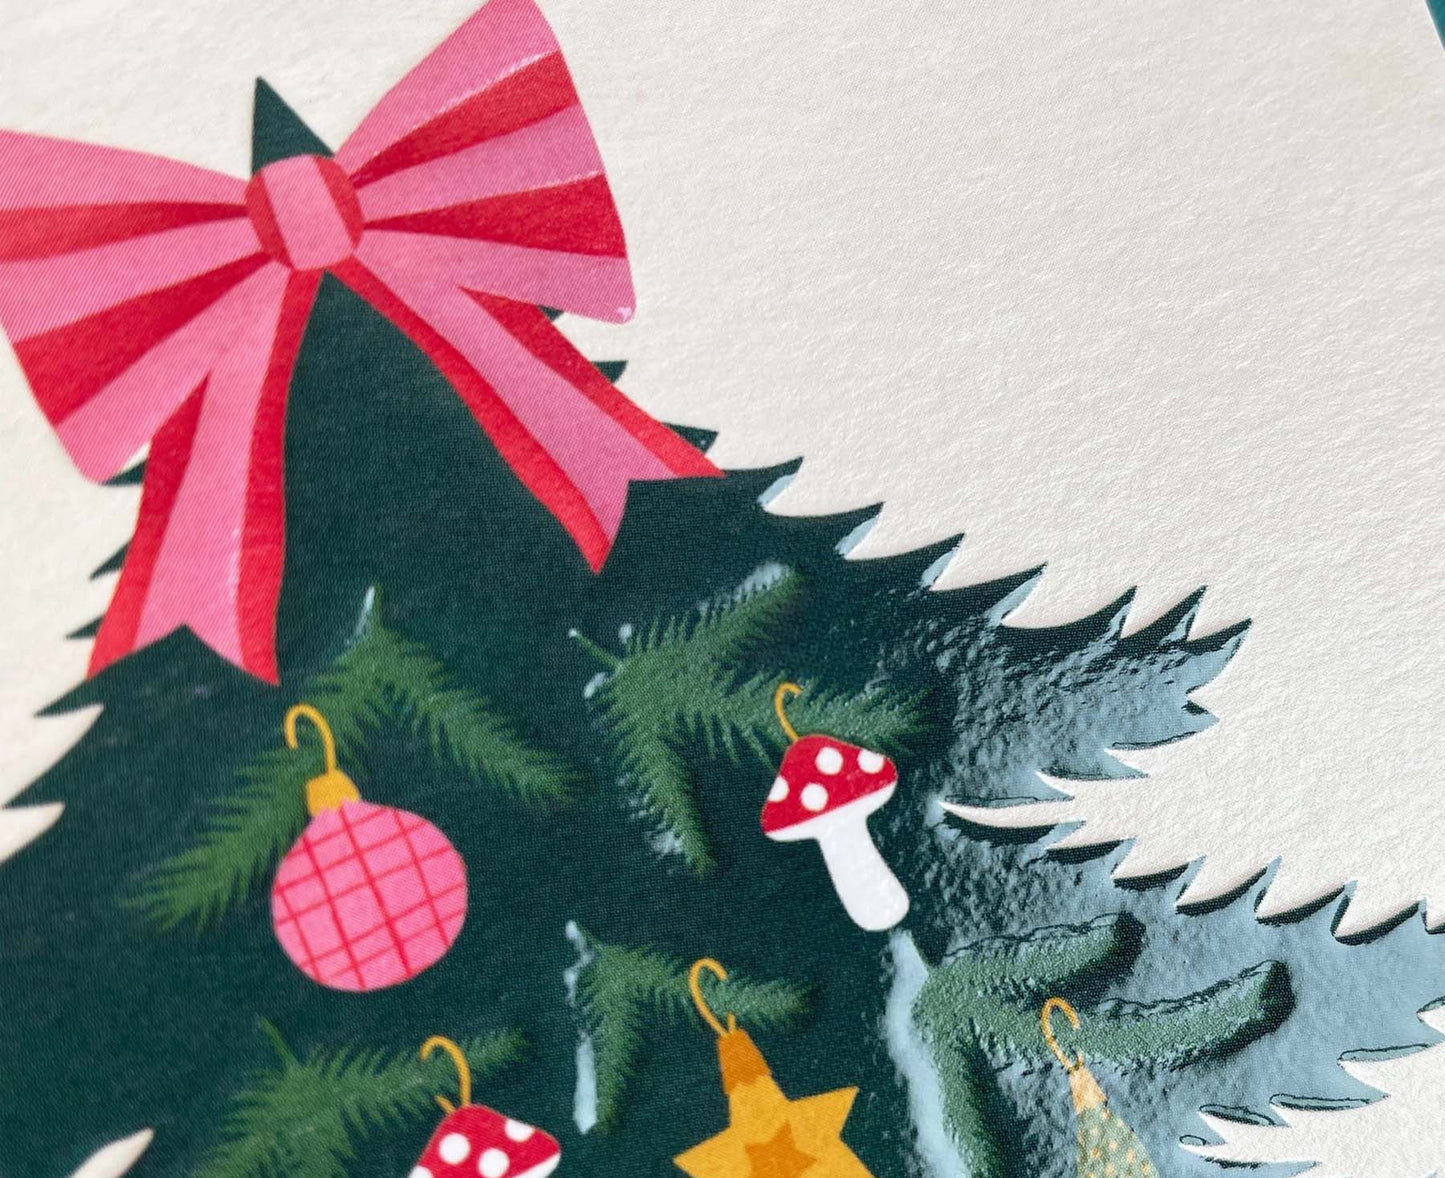 Merry Christmas Christmas Tree & Presents embossed Christmas card